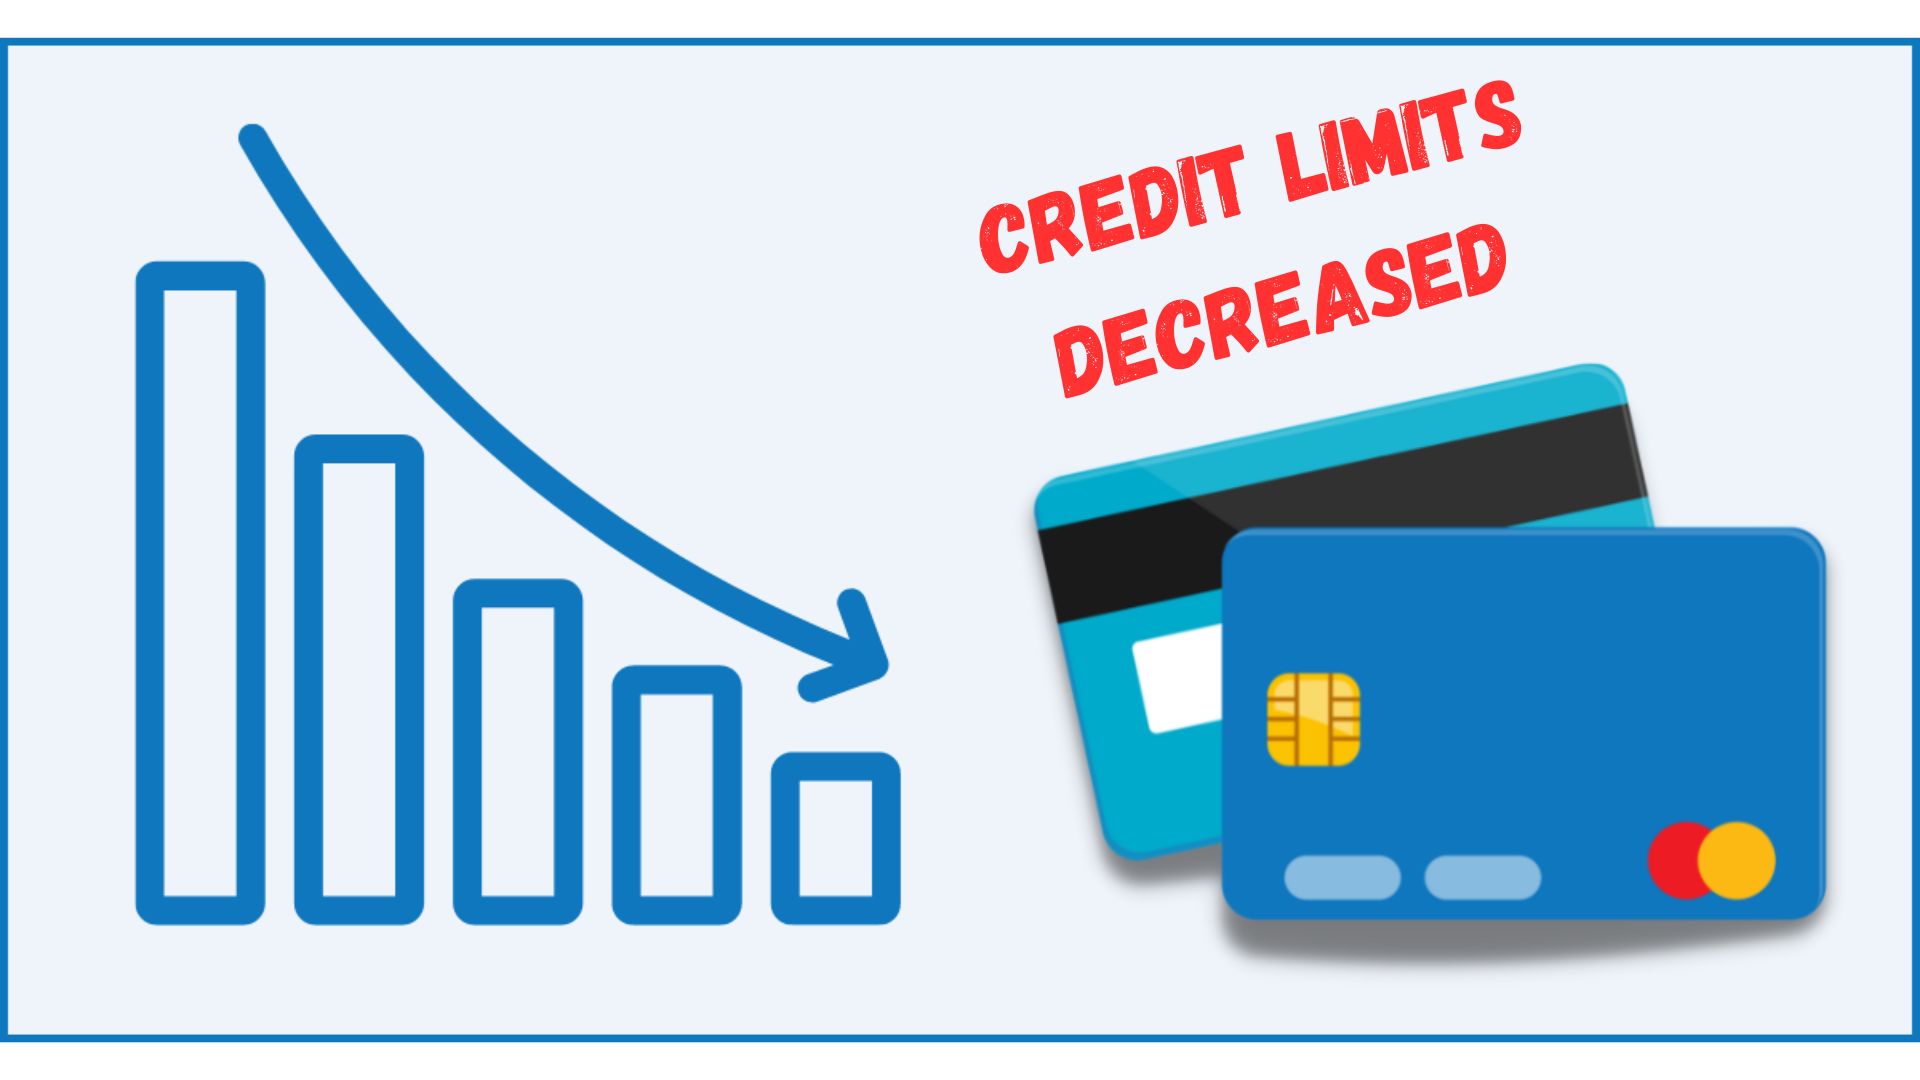 Credit Limits Decreased